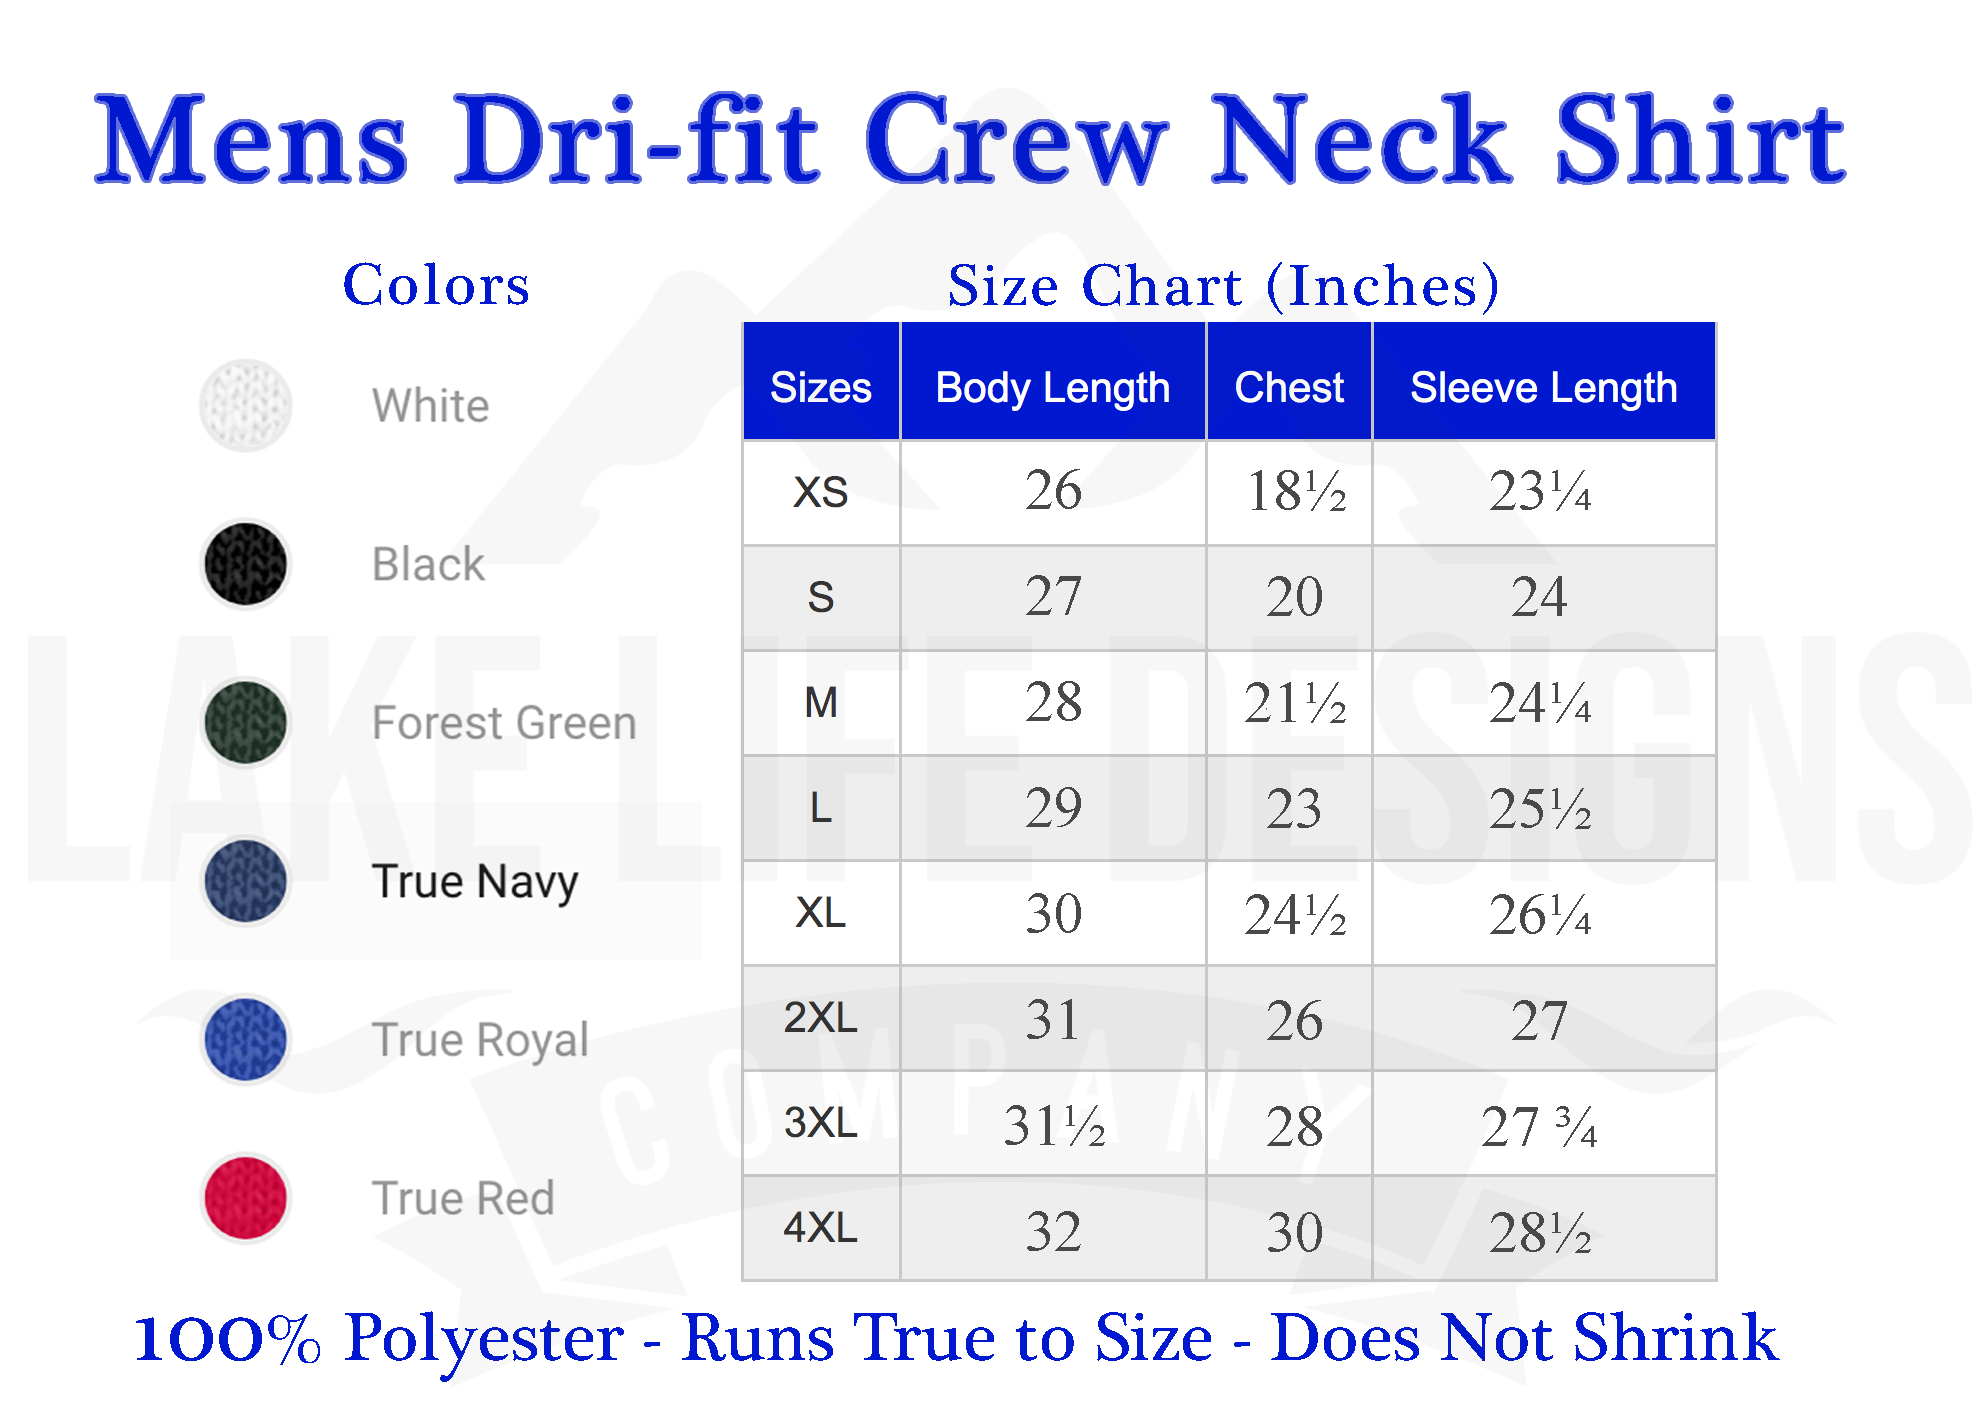 Kerr Lake Life Dri-fit Boating Shirt - Breathable Material- Men's Long Sleeve Moisture Wicking Tee - North Carolina & Virginia Lake